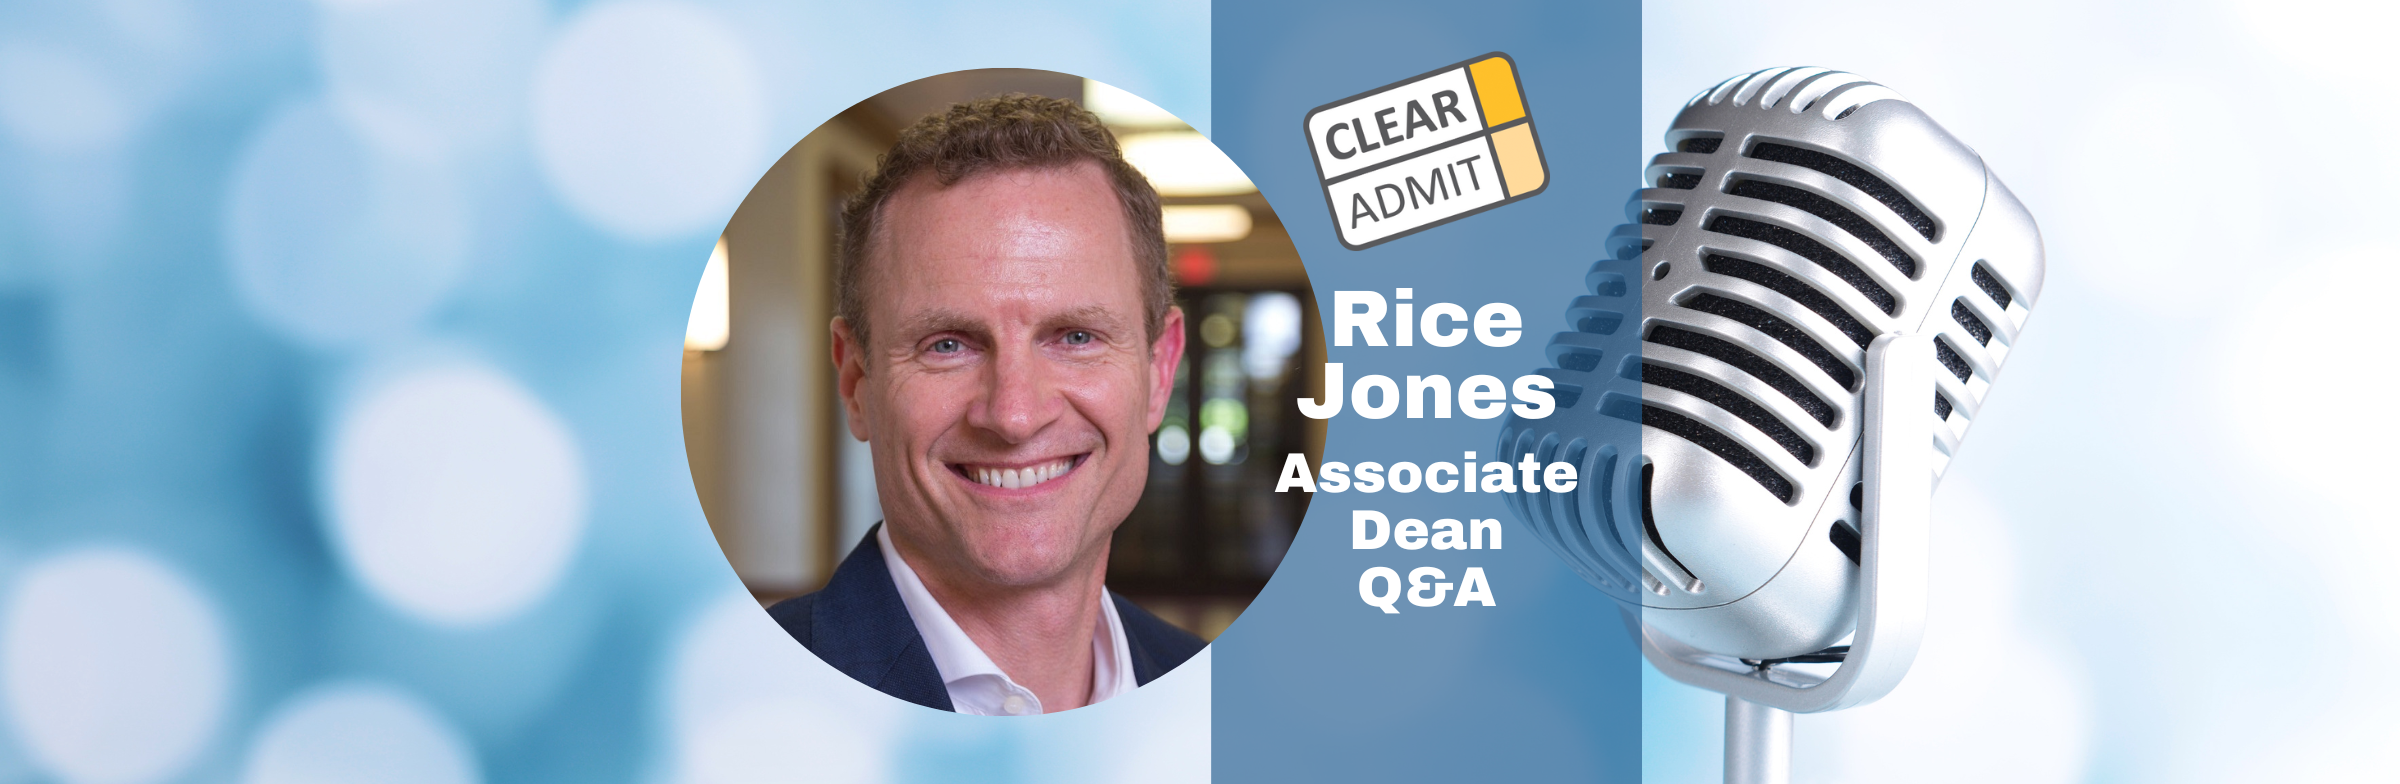 Image for Associate Dean Q&A: George Andrews of Rice Jones Graduate School of Business